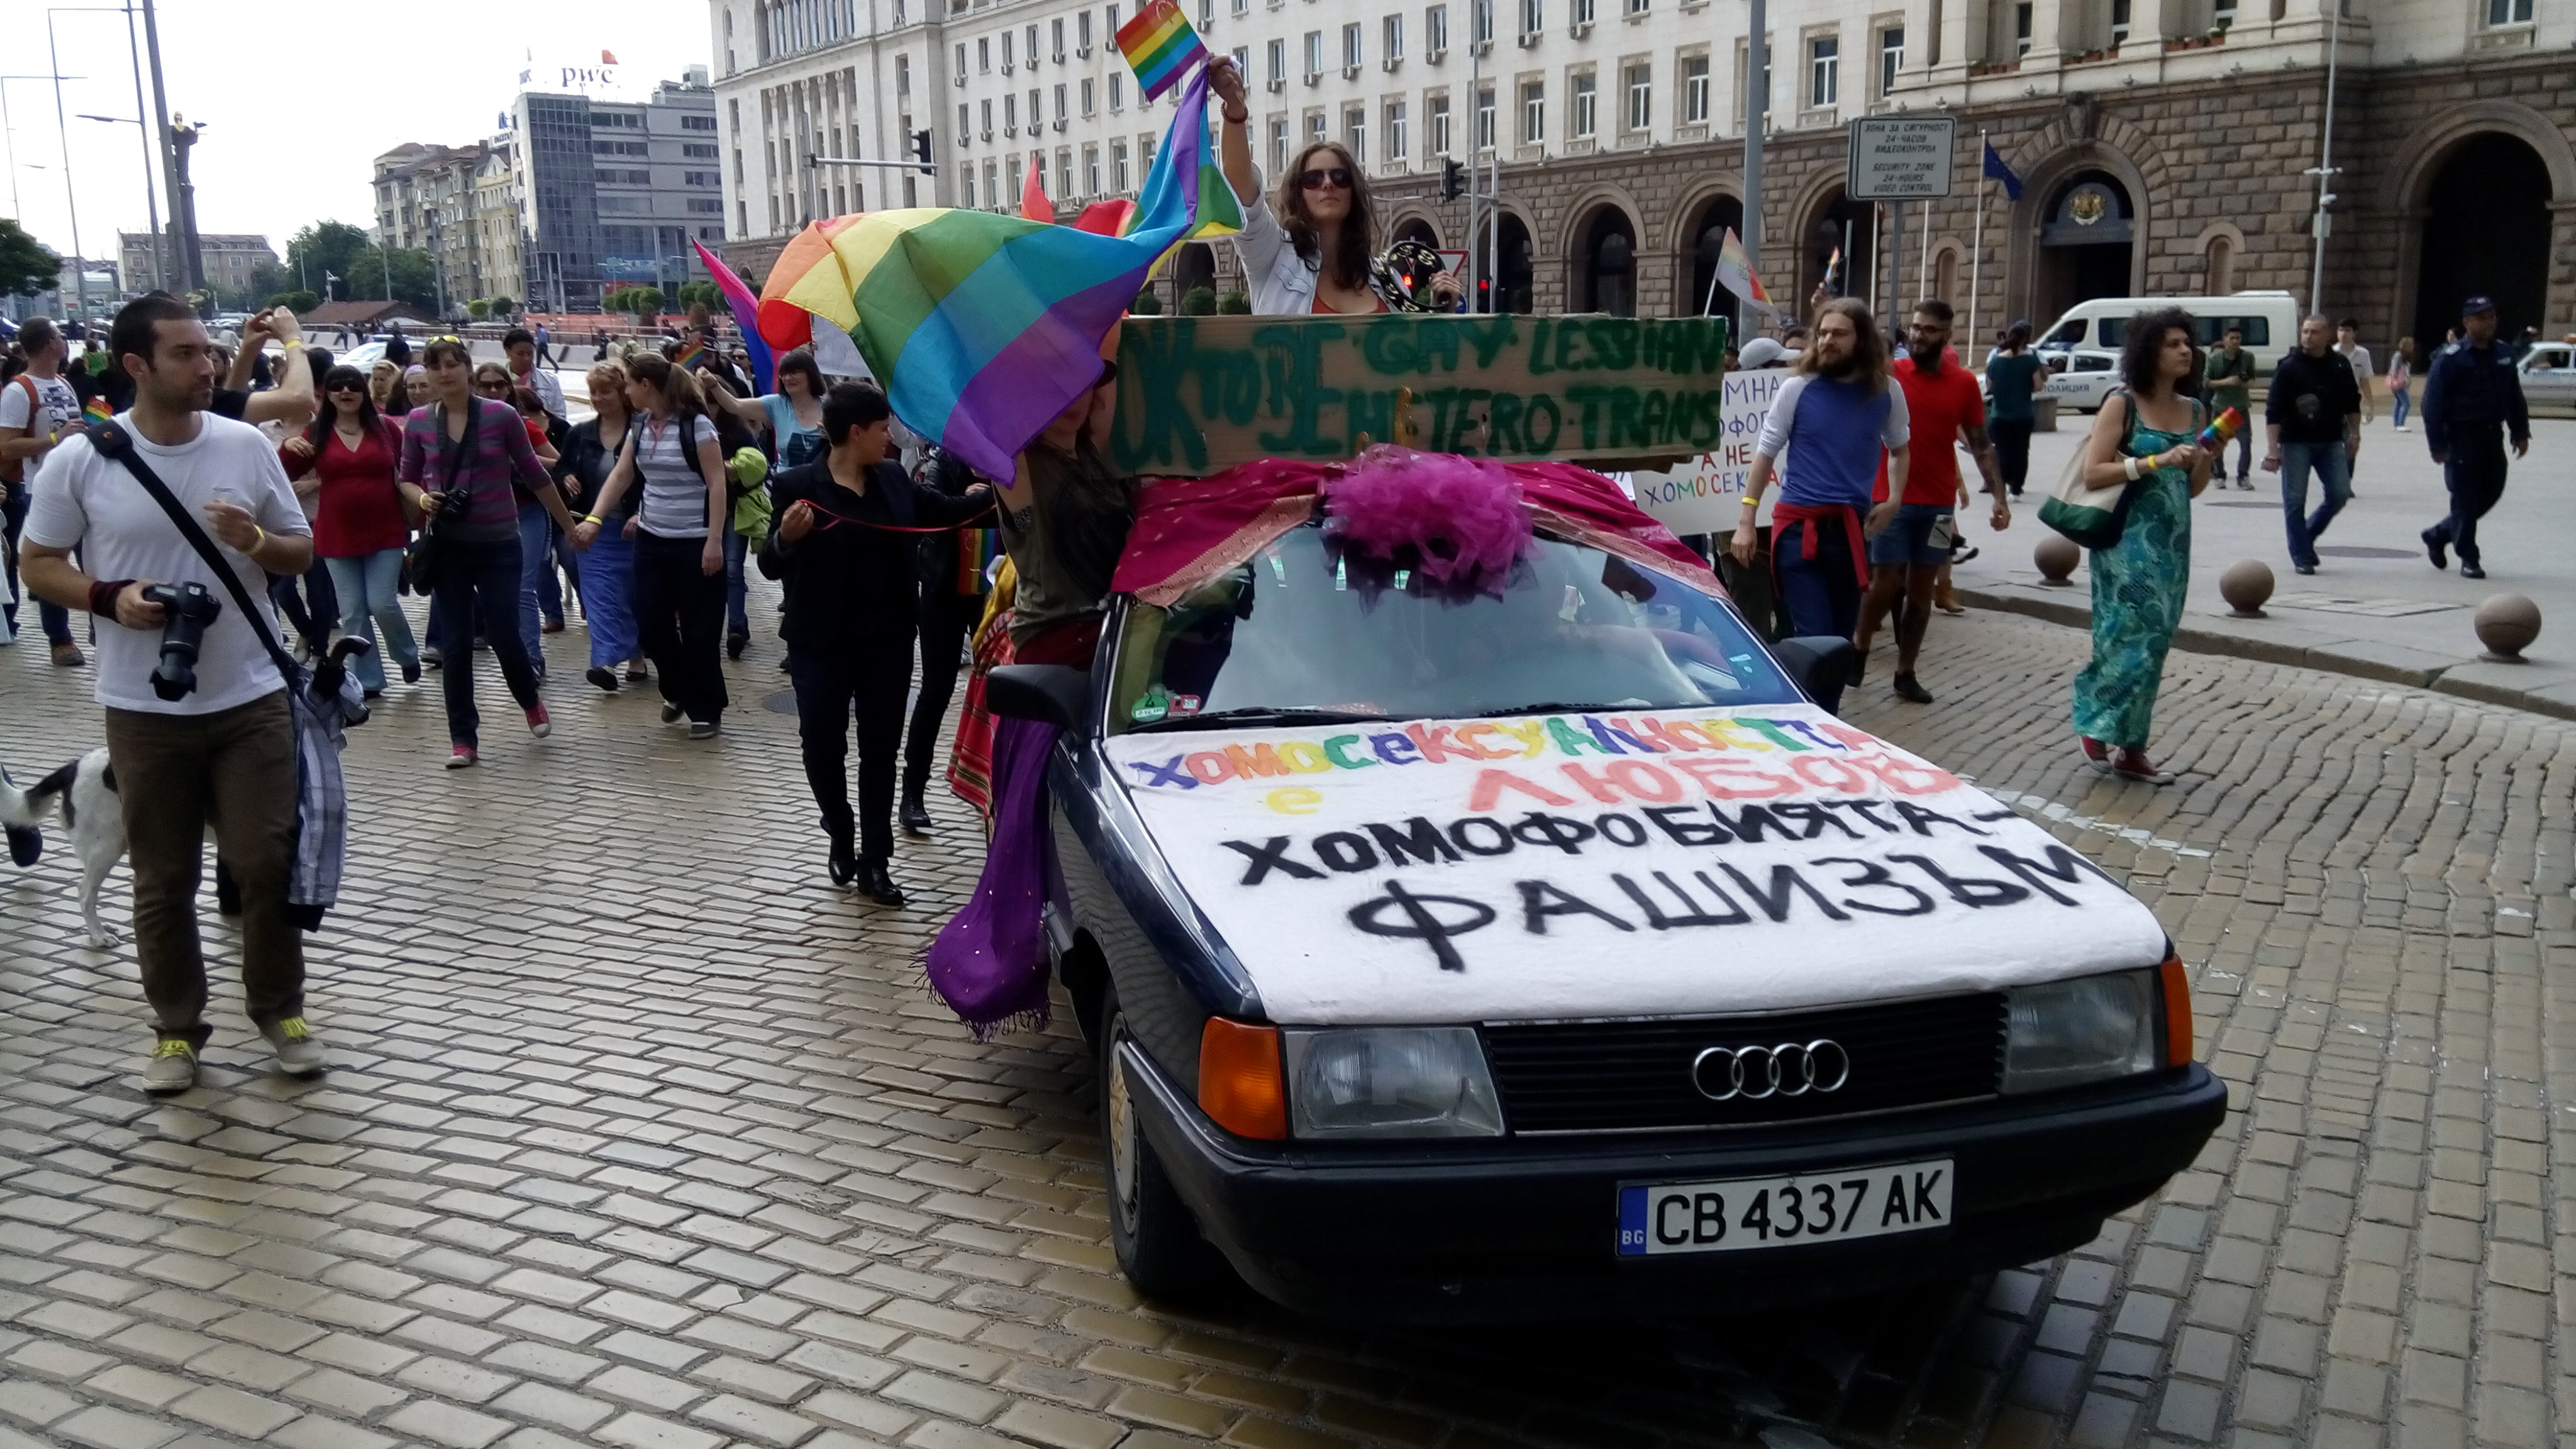 8-ят гей-парад в София приключи (СНИМКИ)